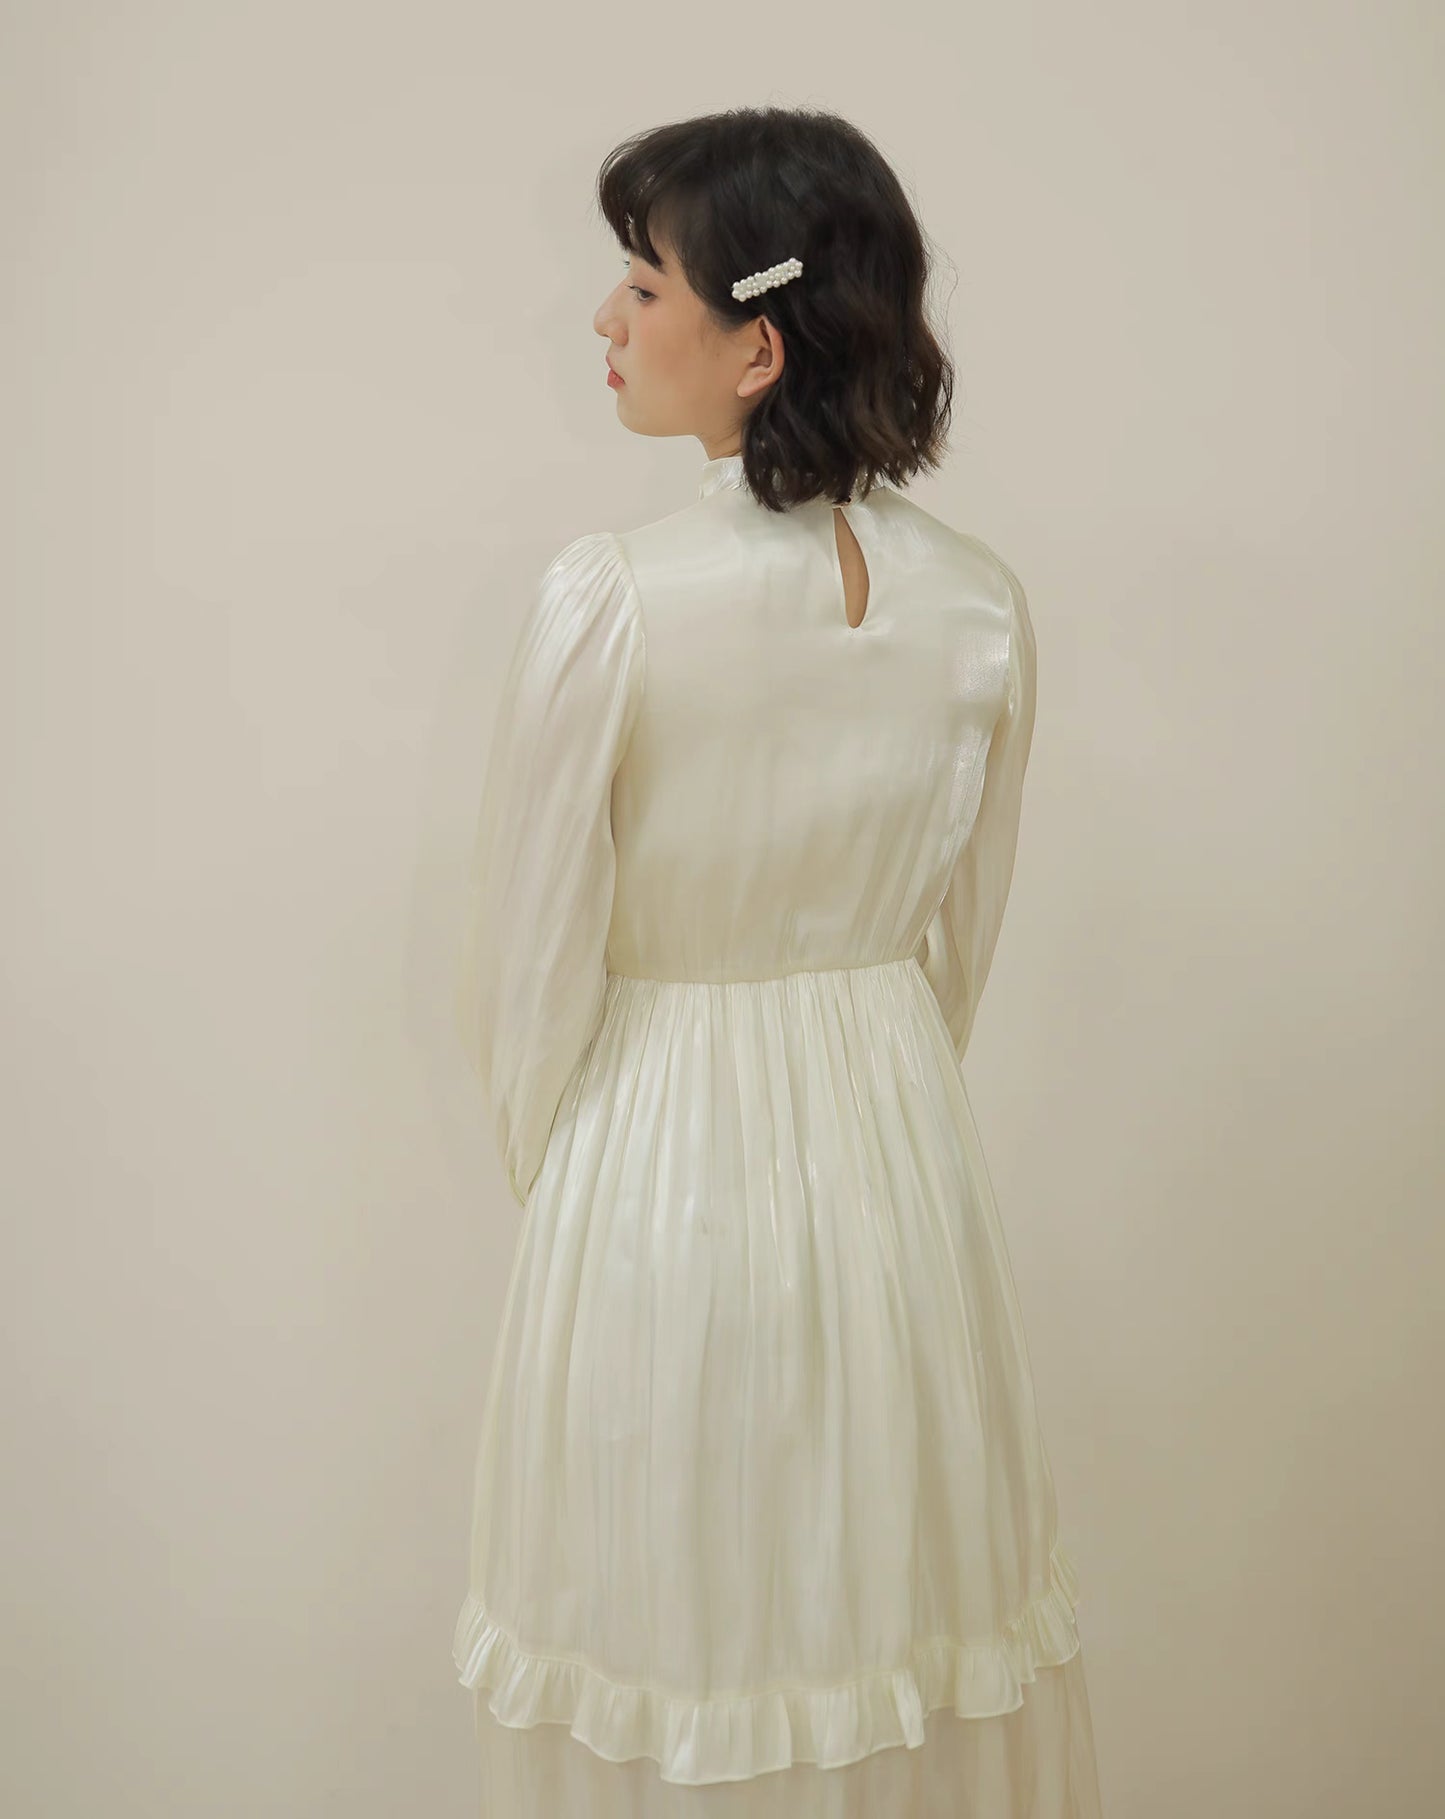 gold-white satin ruffled stand-collar dress